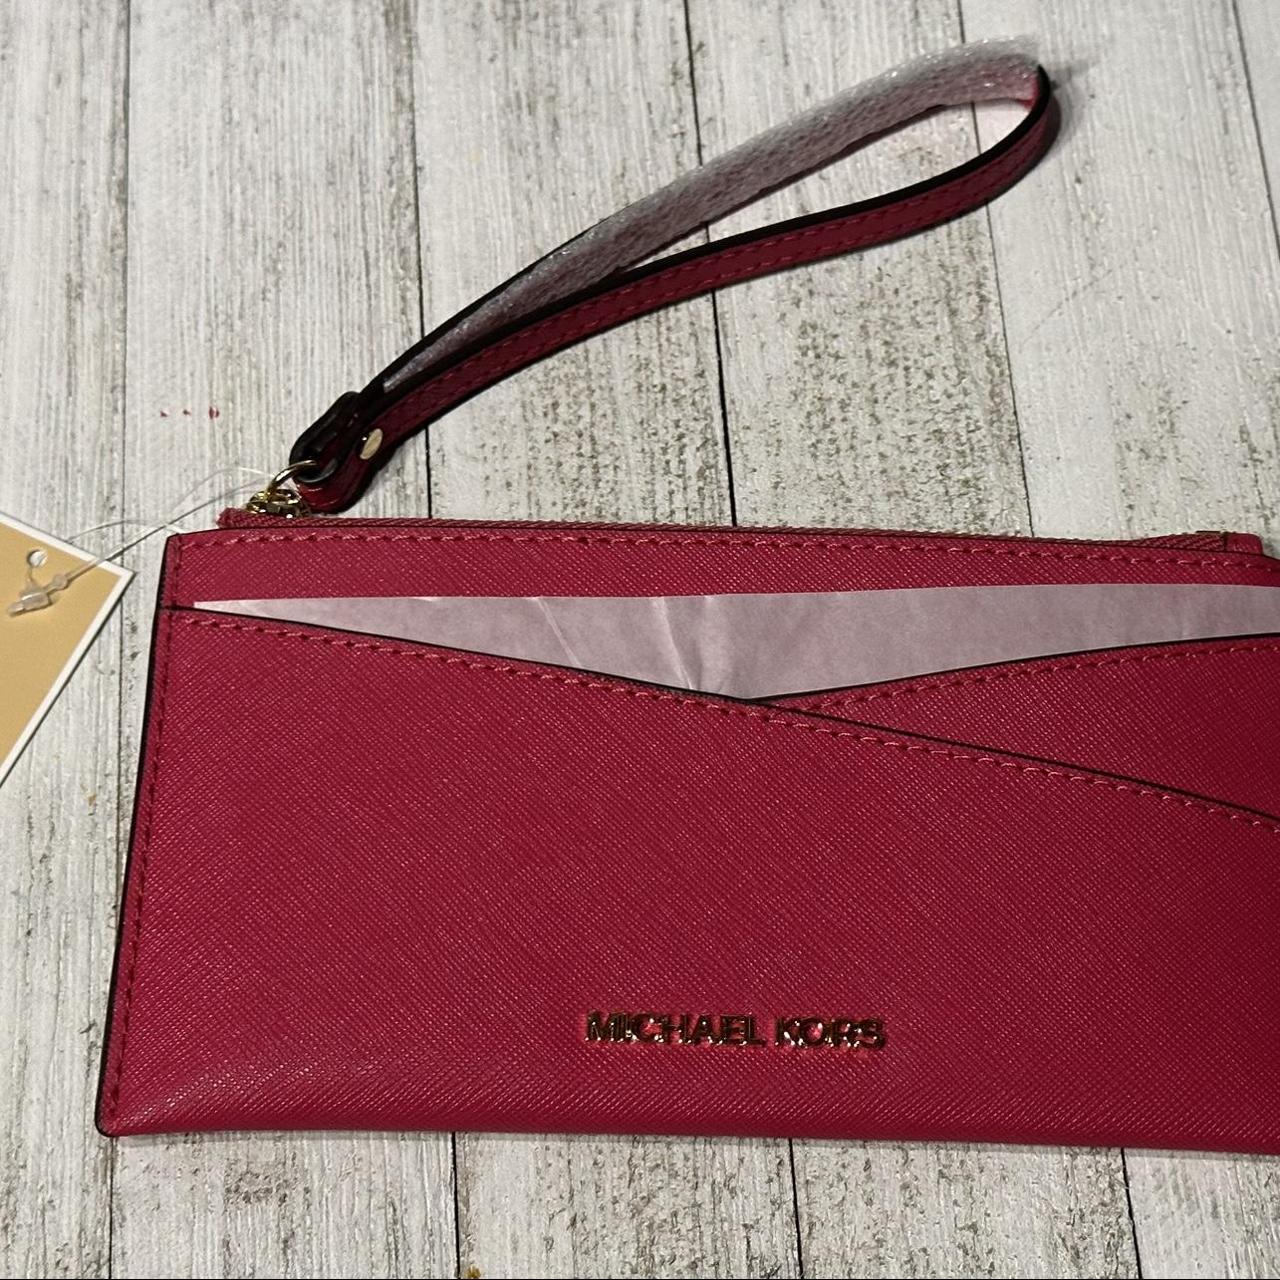 Jet Set Medium Saffiano Leather Crossover Wristlet: Handbags